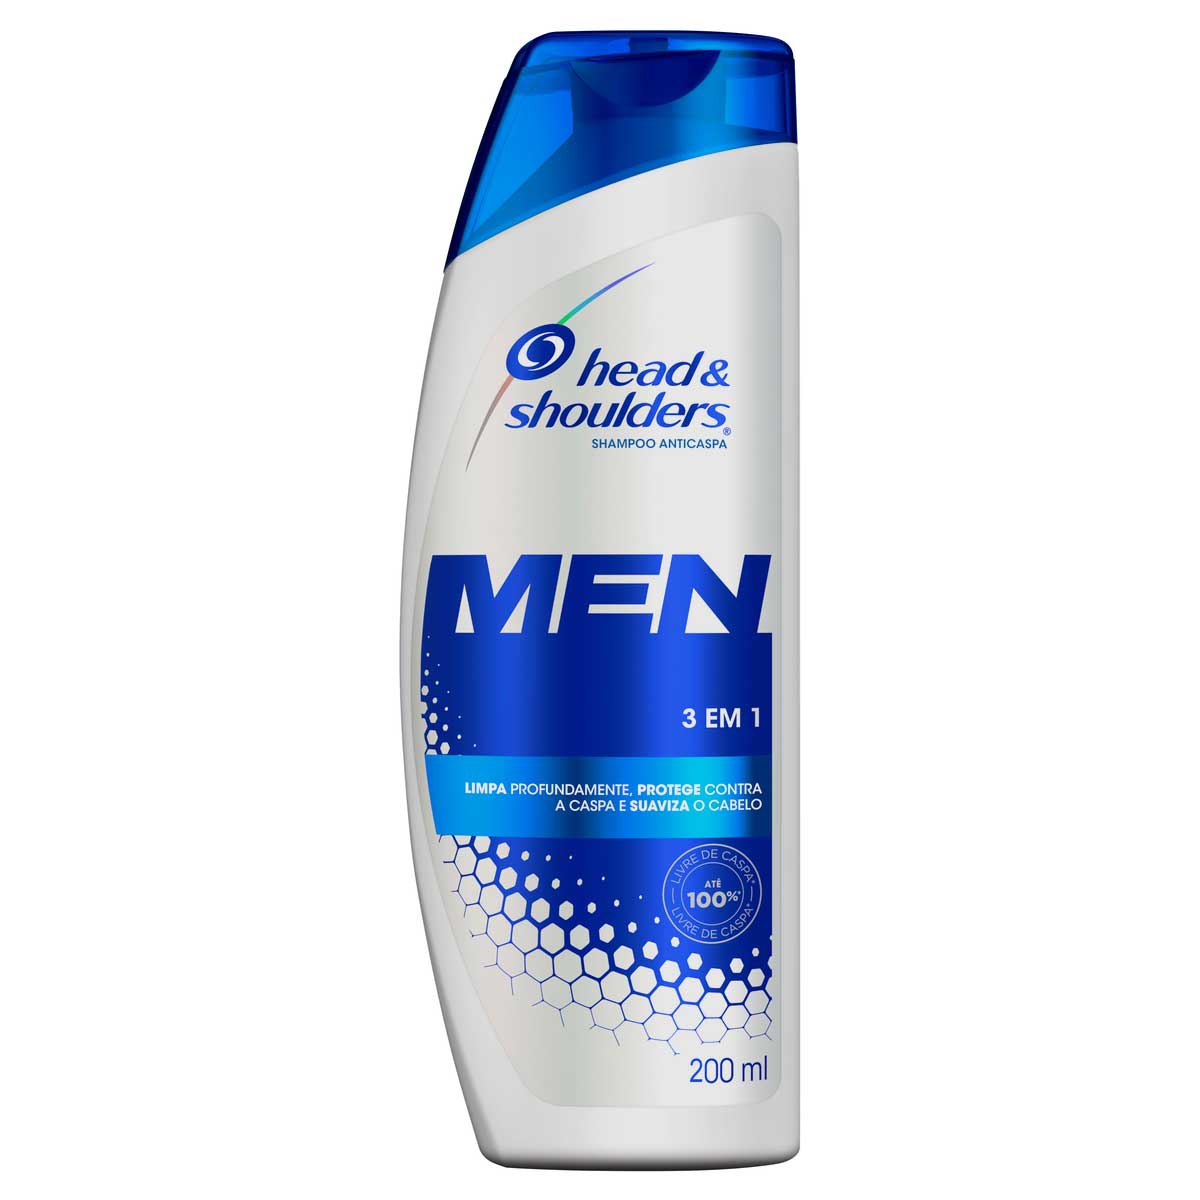 shampoo-anticaspa-head-&-shoulders-200ml-1.jpg